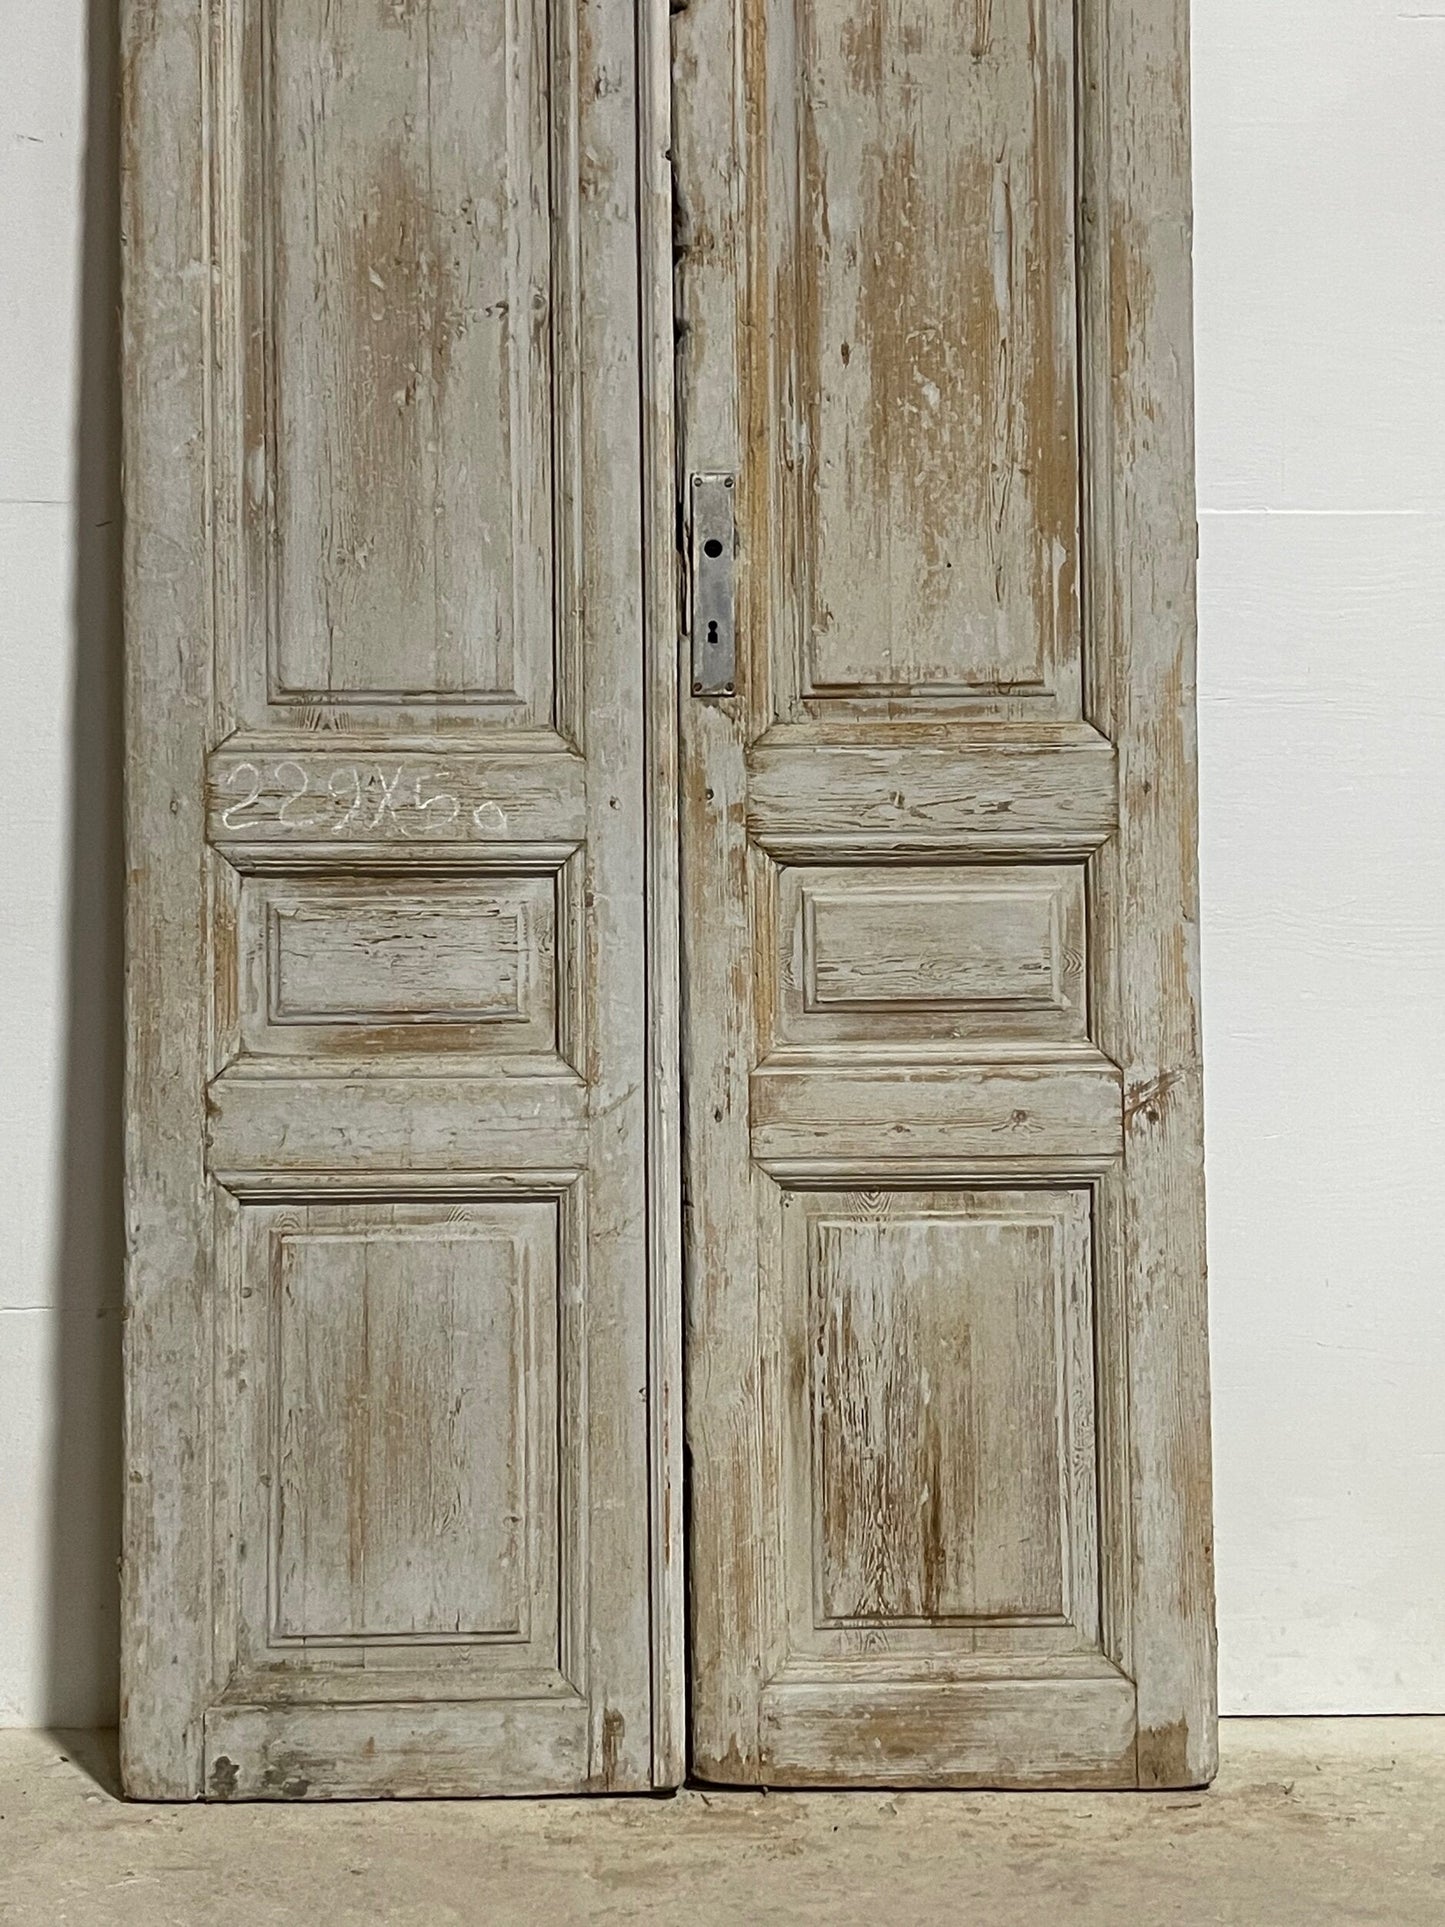 Antique French panel doors (90.75x39.75) I111